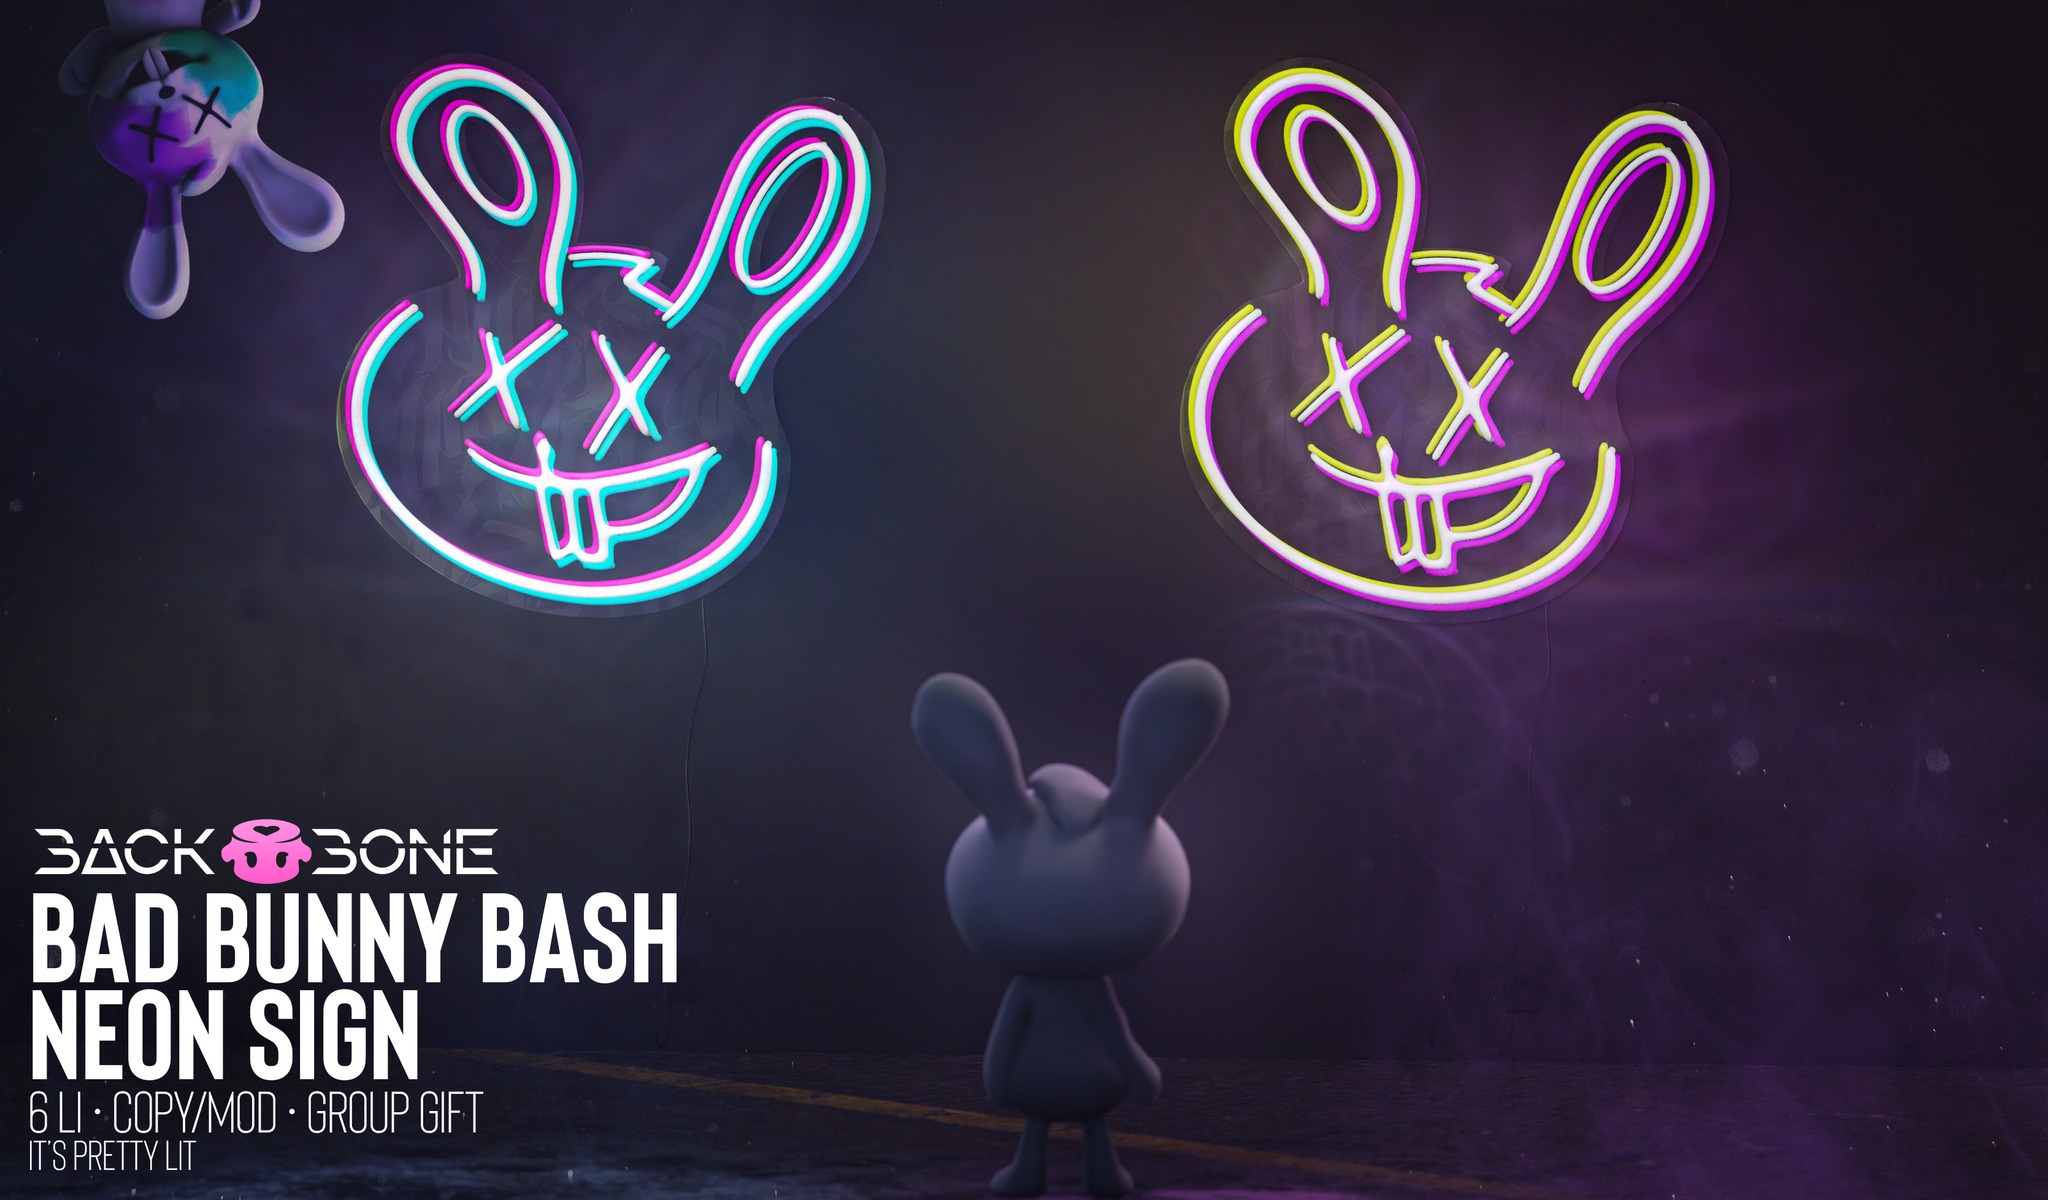 BackBone – Bad Bunny Bash Neon Sign